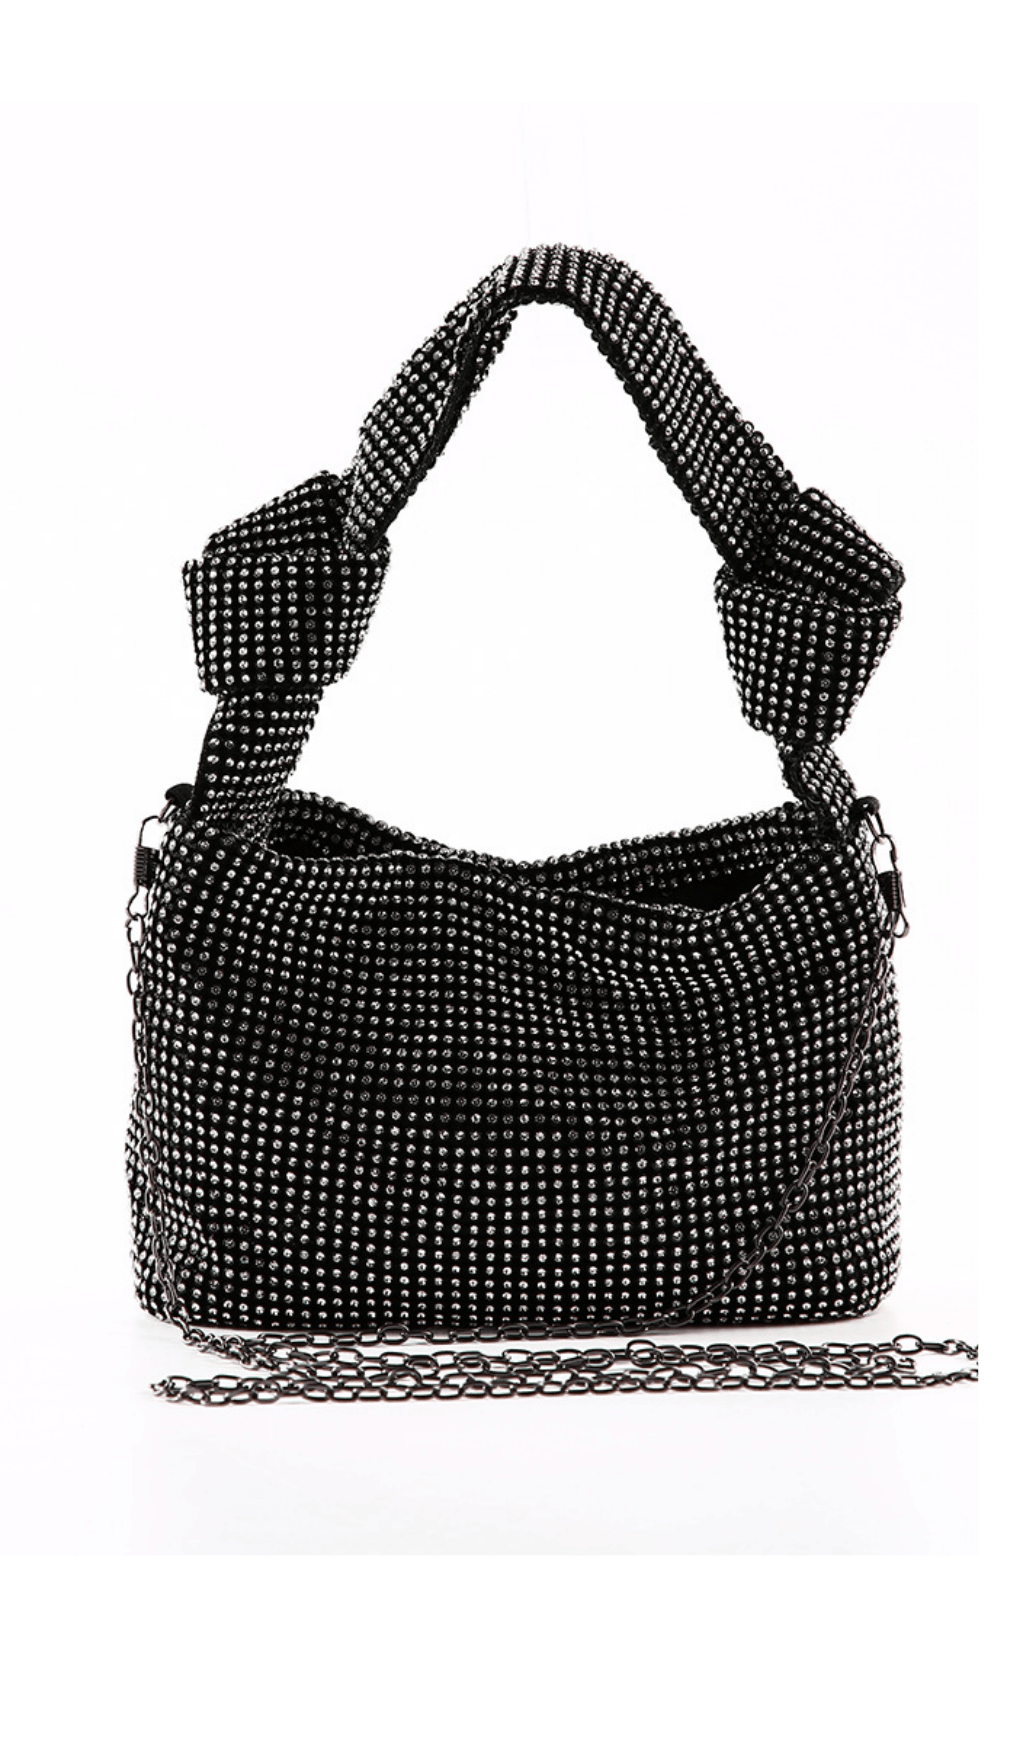 Crystal Handbag - Sliver